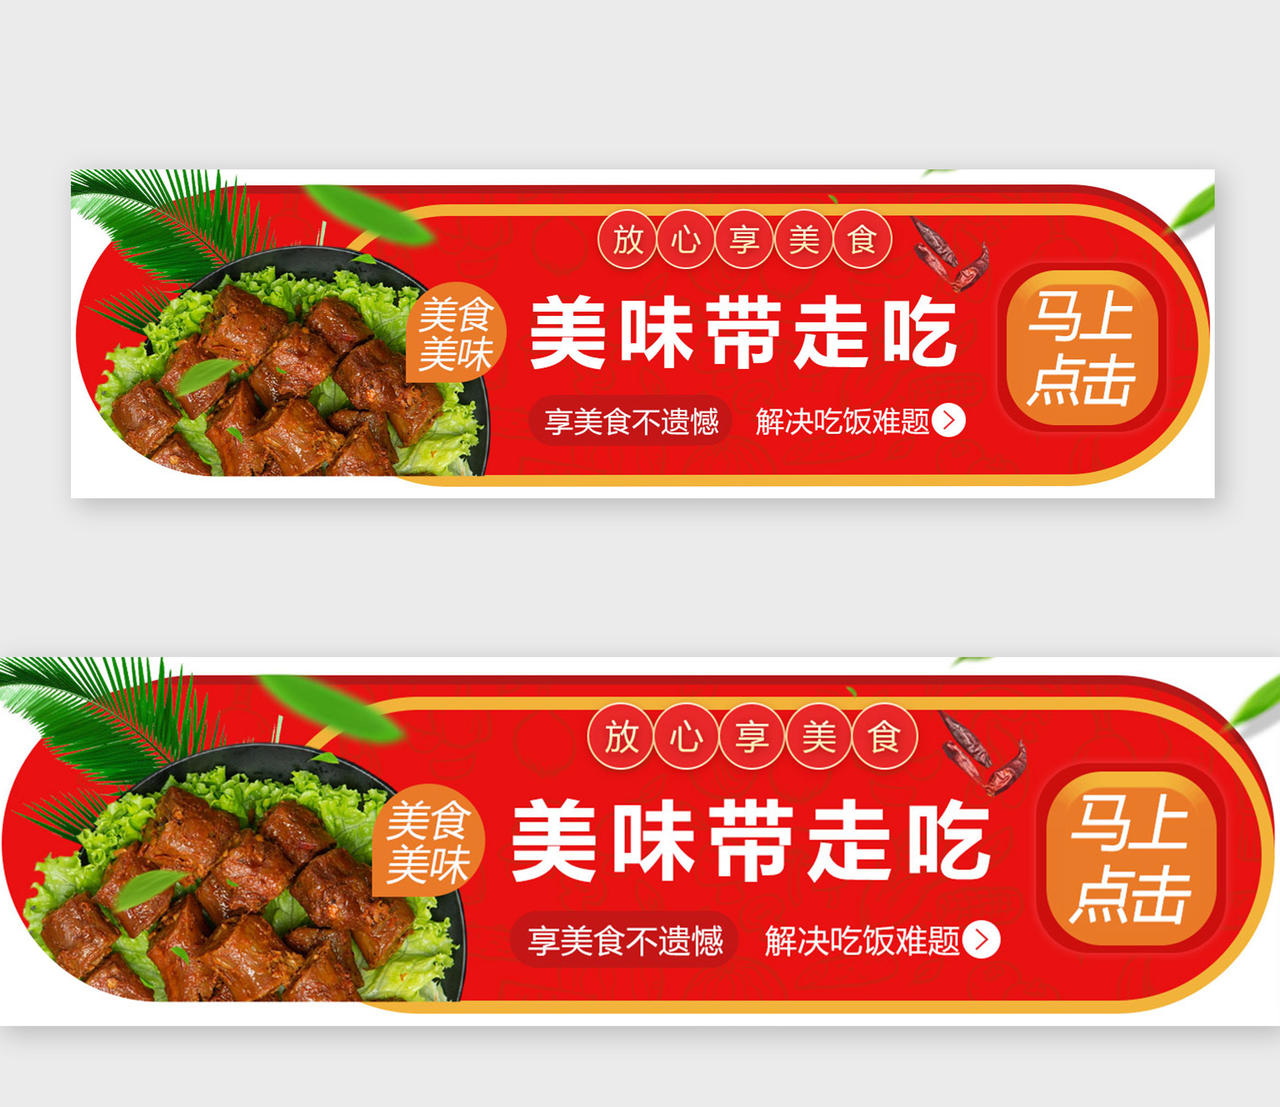 红色背景外卖美食宣传手机bannerbanner